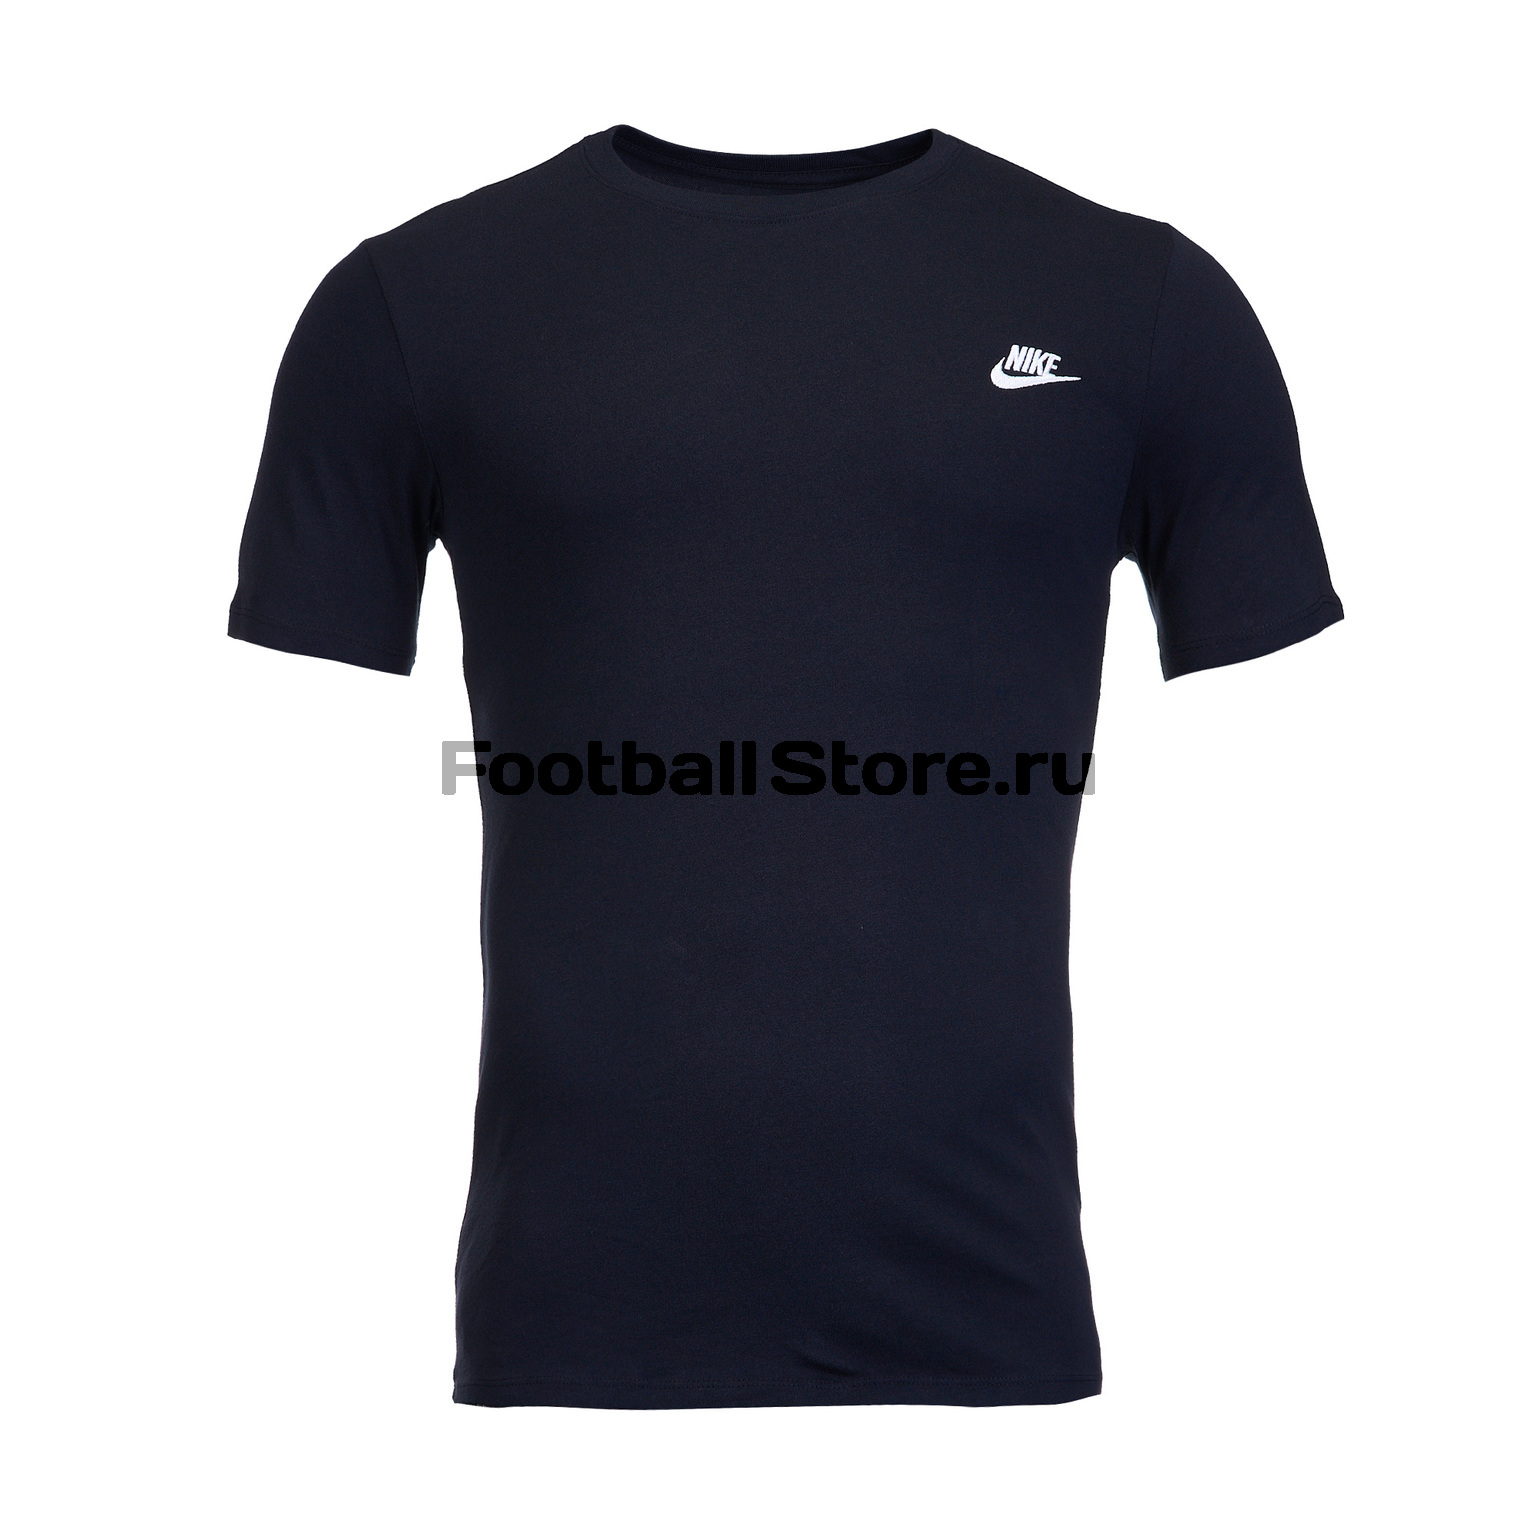 Футболка тренировочная Nike Tee Club Embrd Ftra 827021-011 